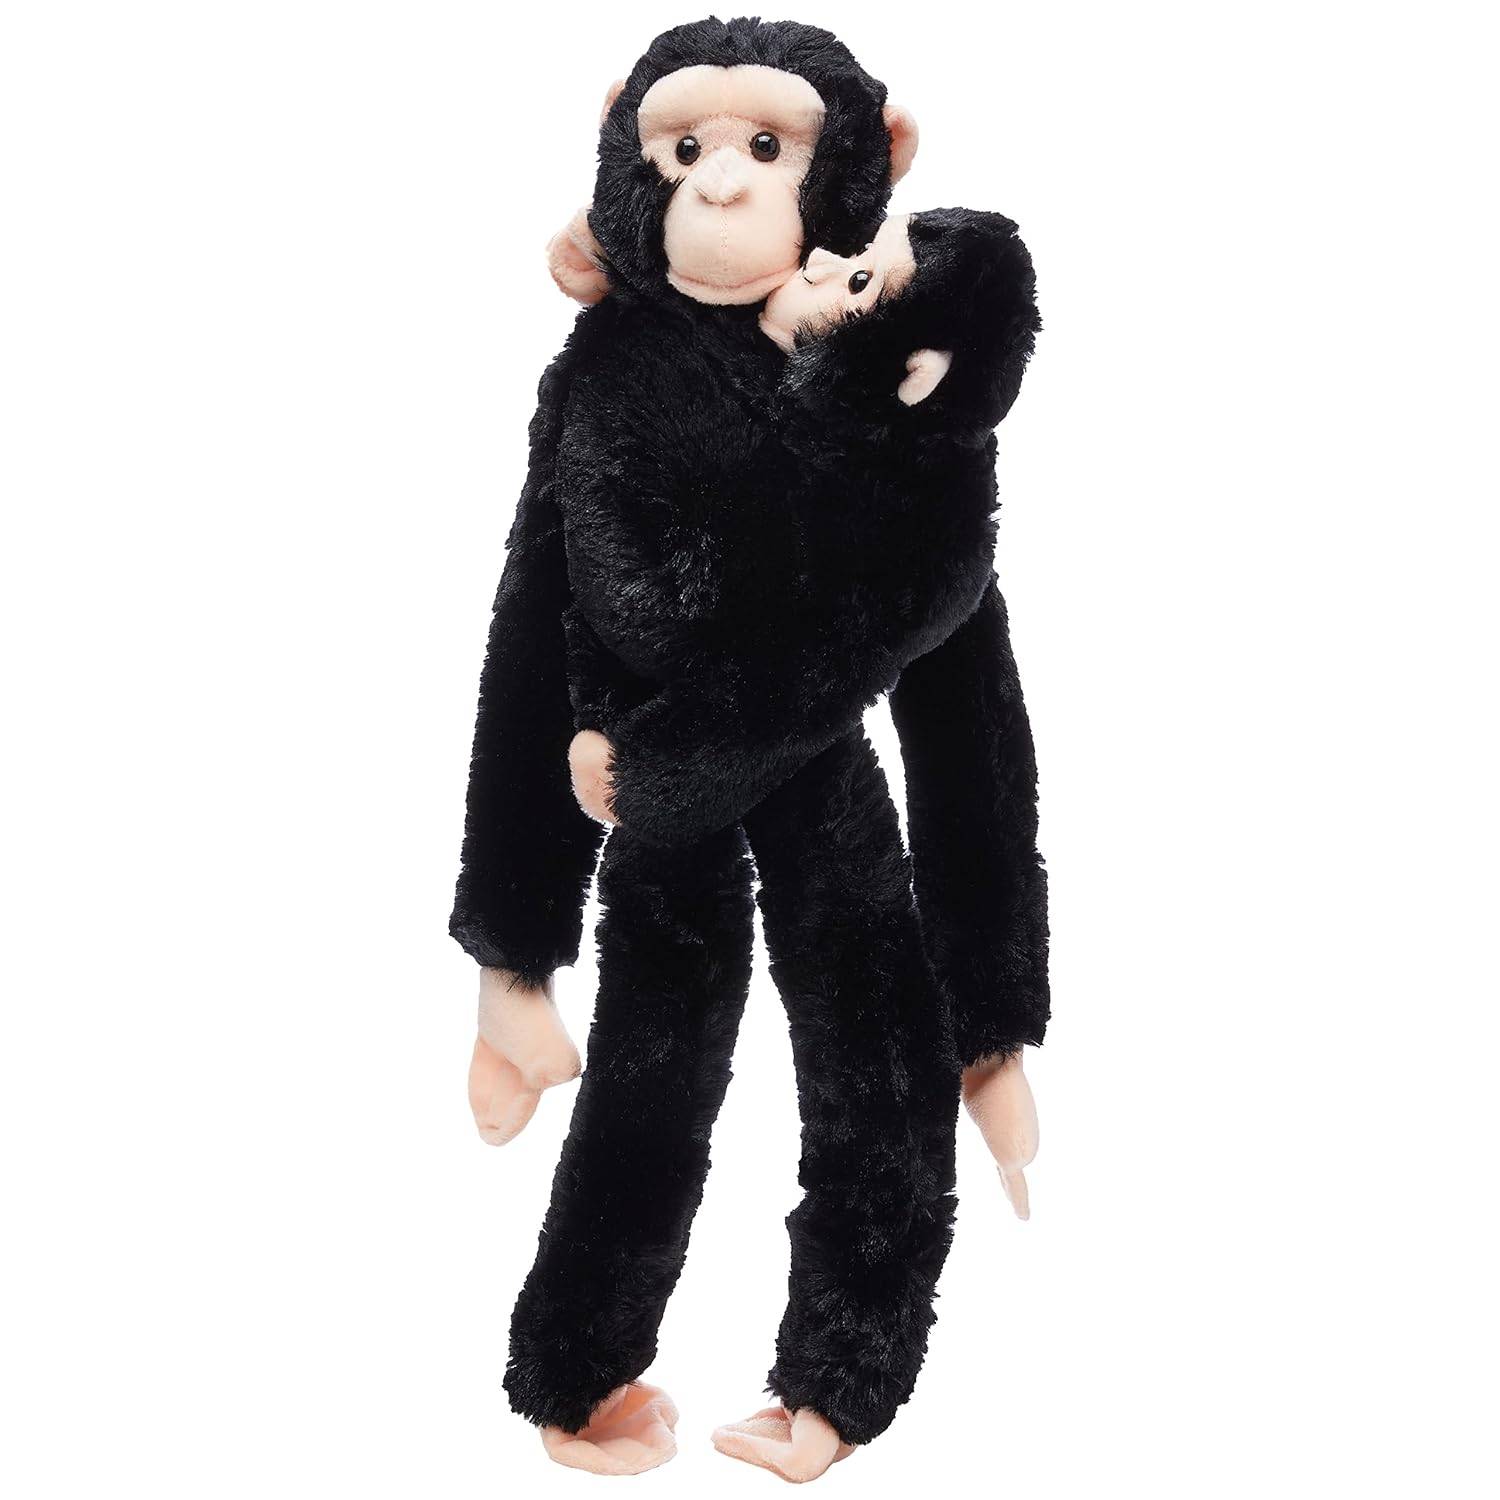 Wild Republic Chimpanzee w/baby plush, Monkey Stuffed Animal, Plush Toy, Gifts for Kids, Hanging 20 Inches